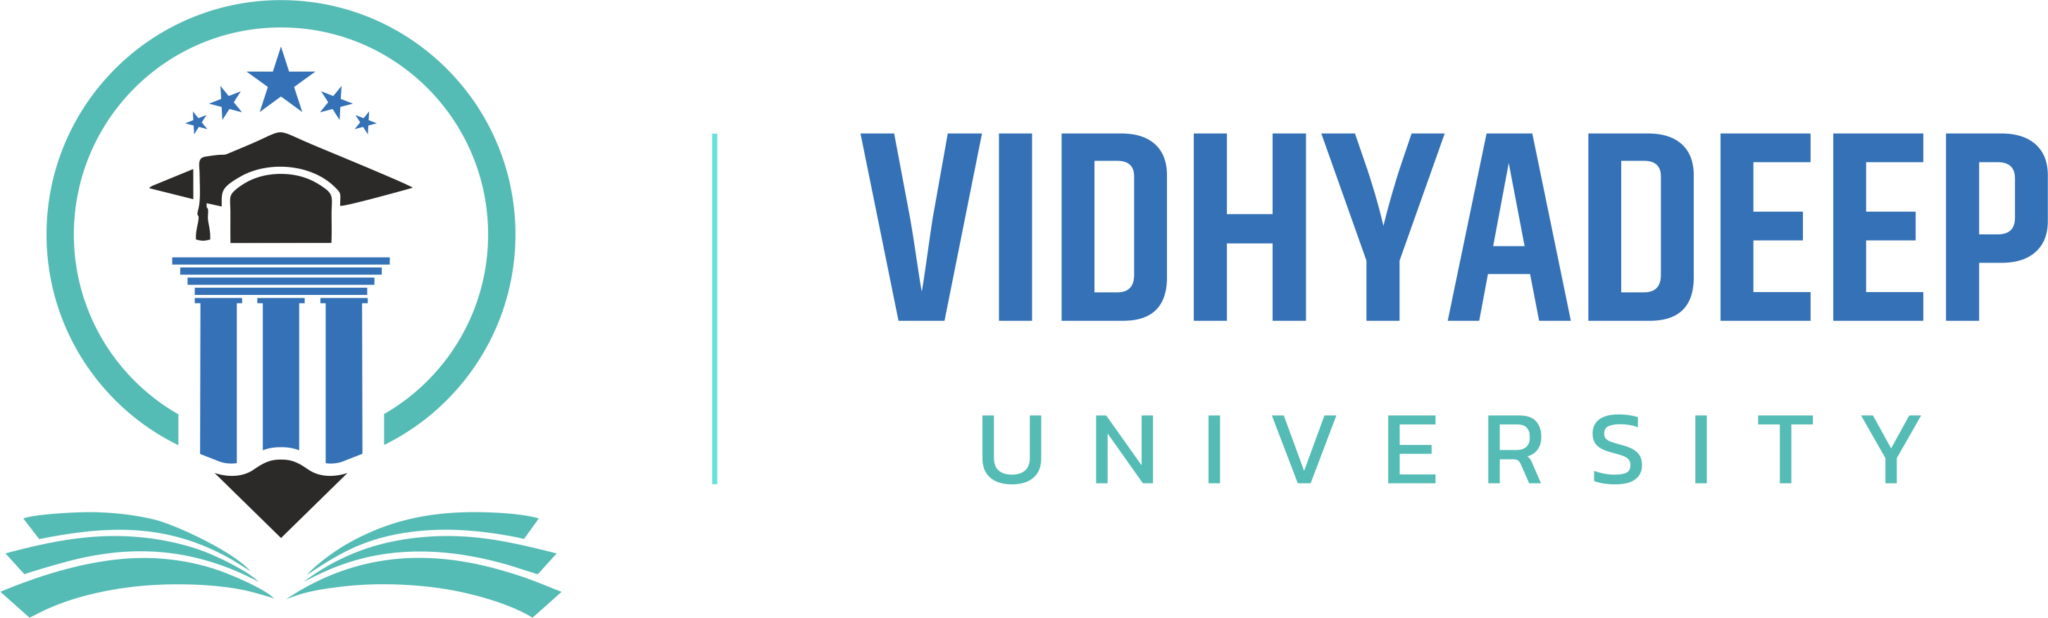 Vidyadeep-Logo-2048x618.png